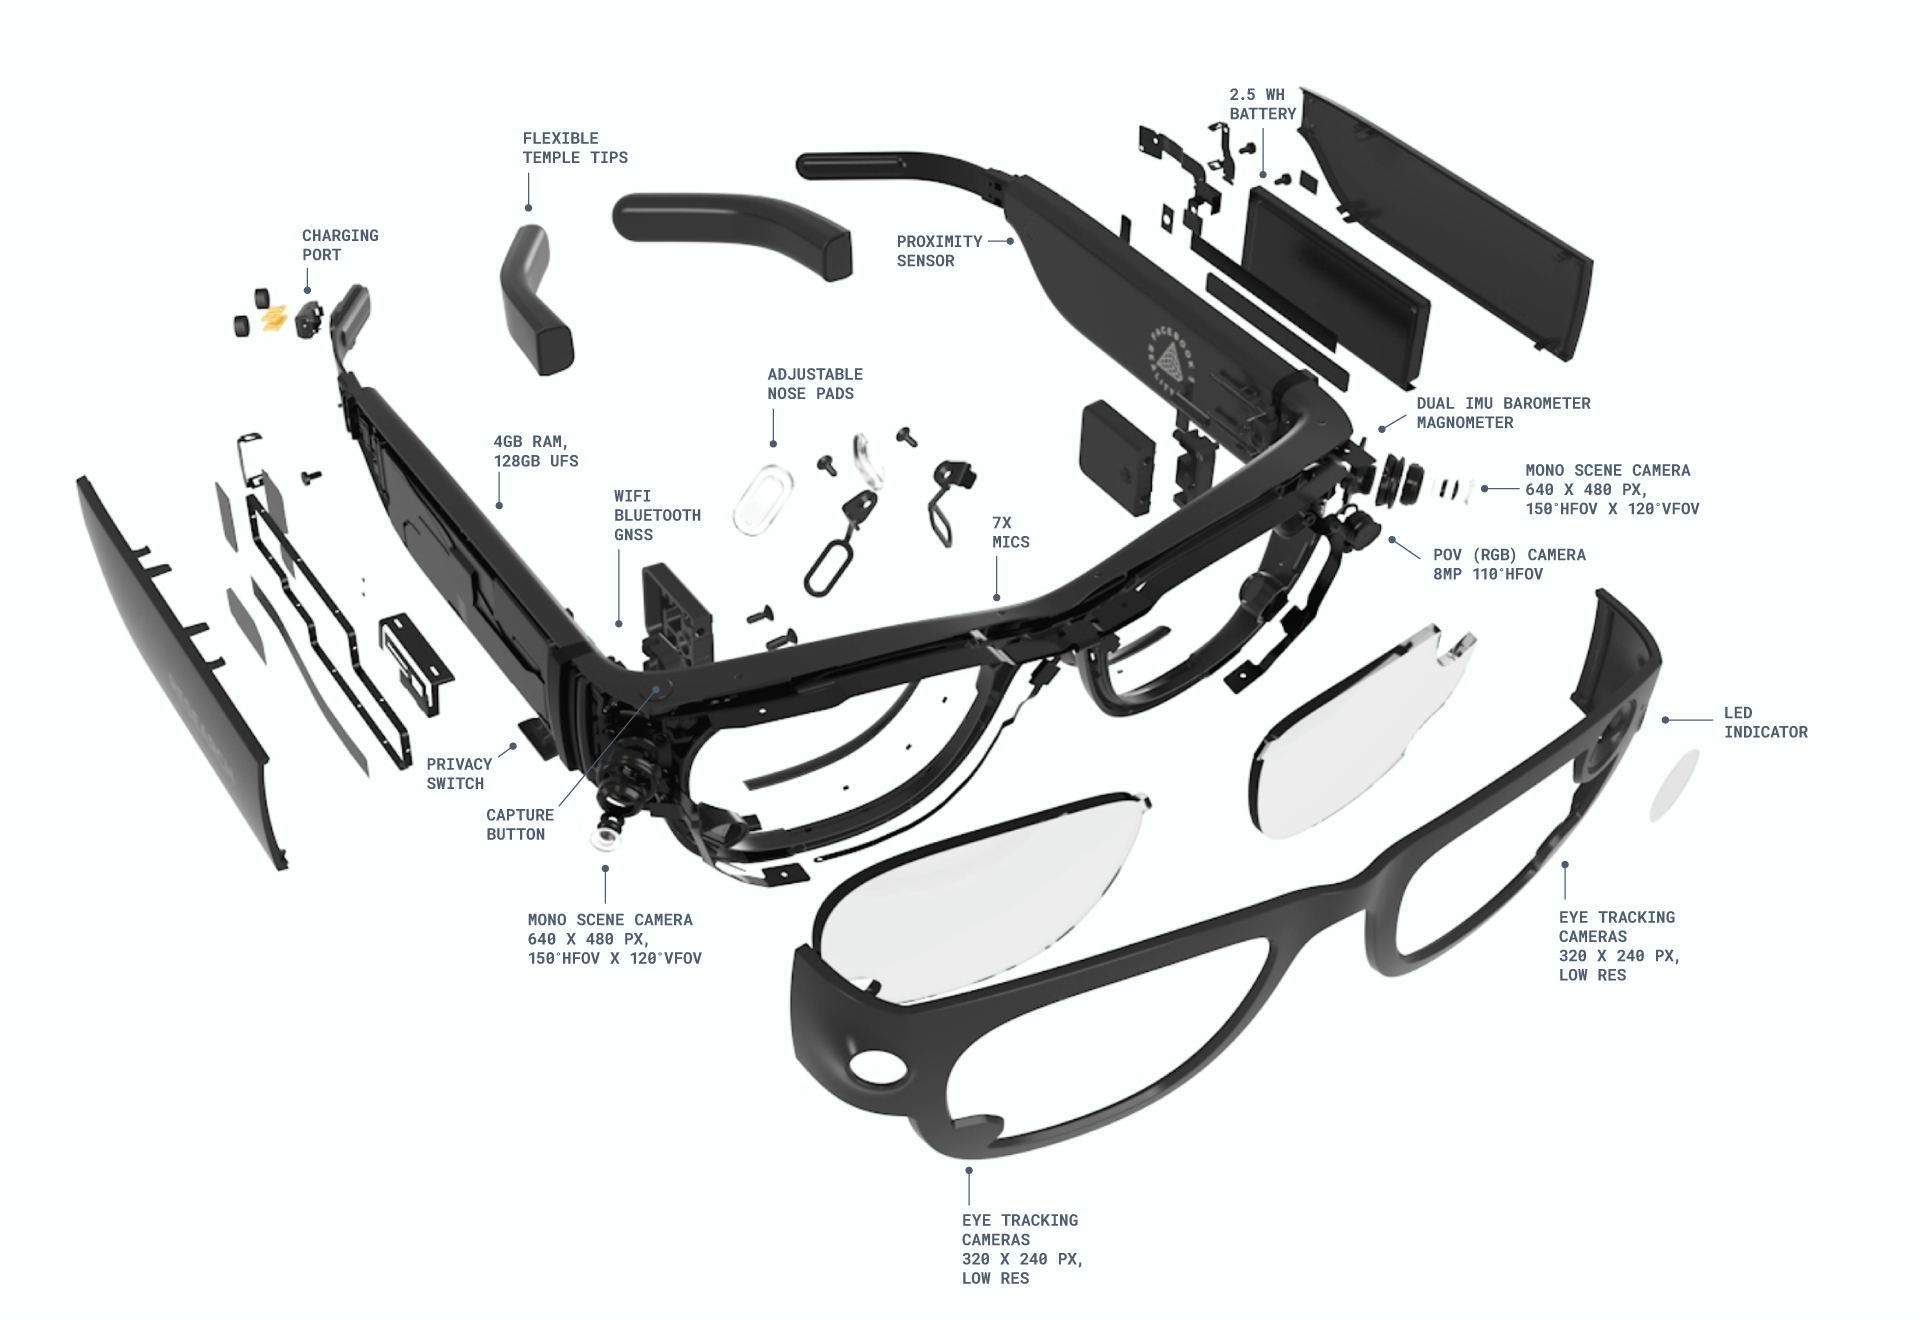 Aria glasses and their sensors